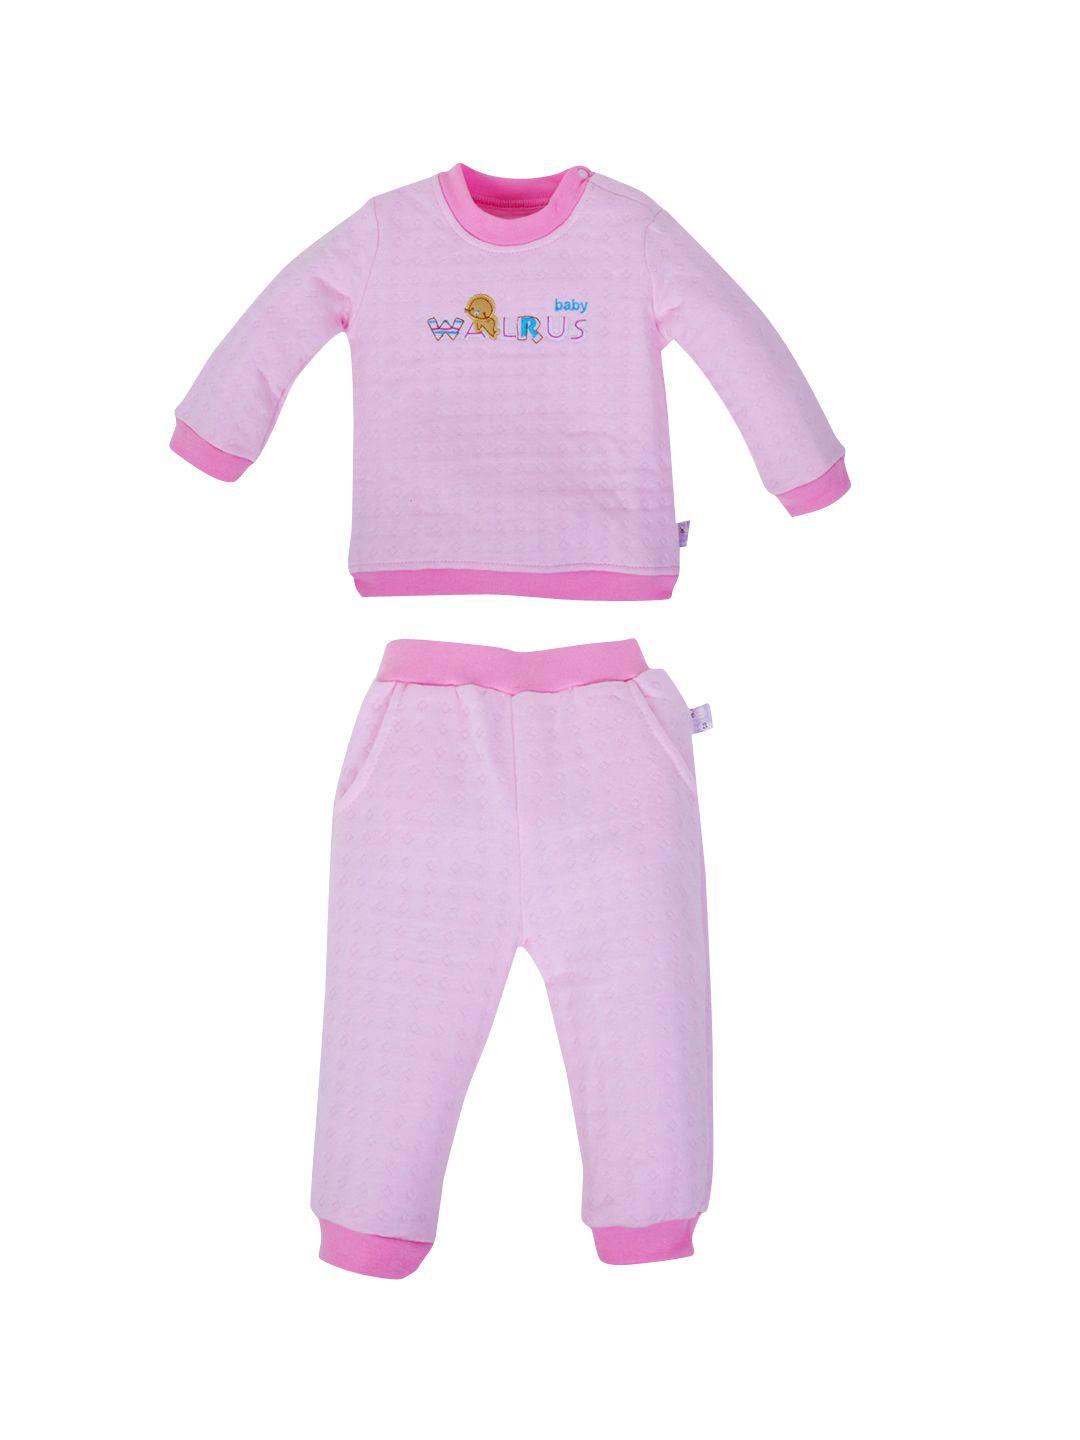 pokory unisex kids pink & blue printed pure cotton night suit